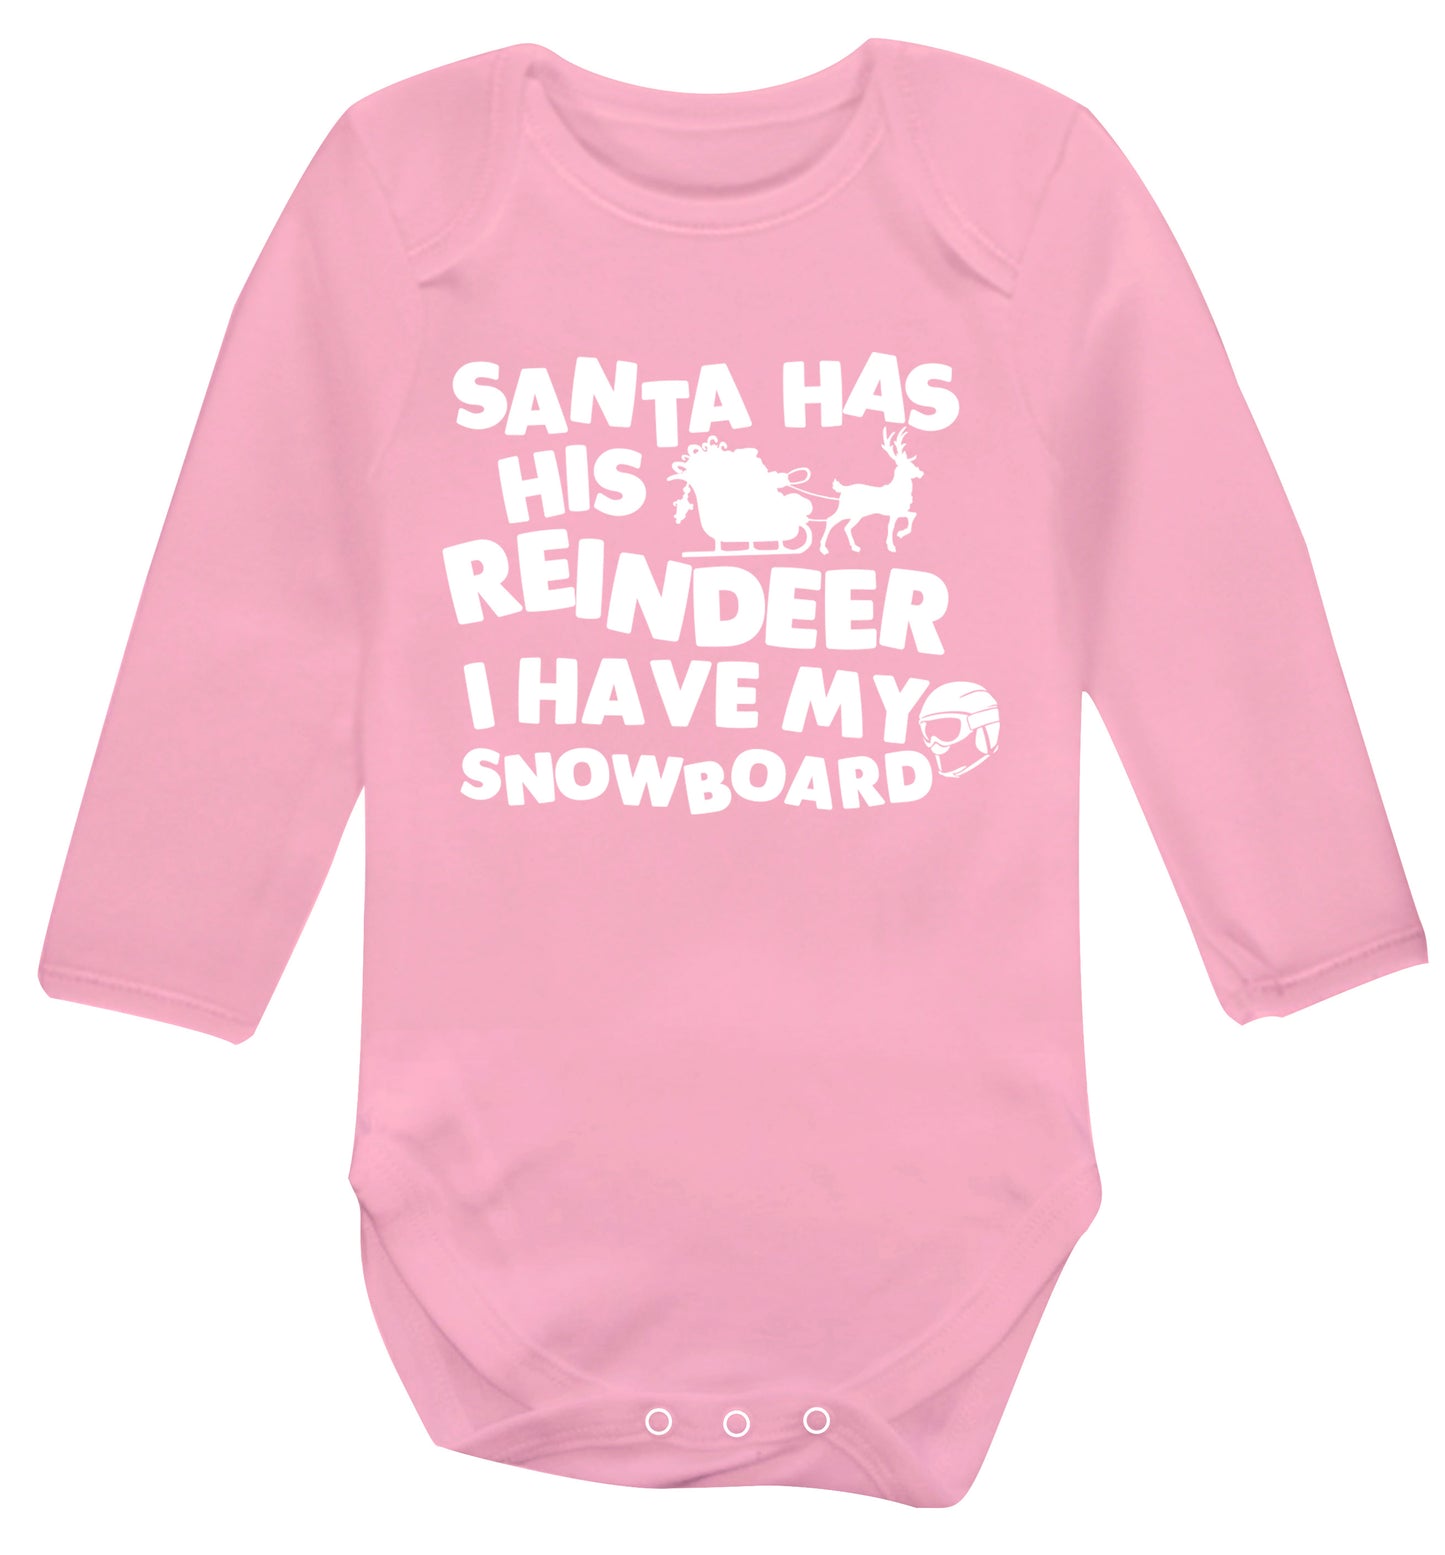 Santa has his reindeer I have my snowboard Baby Vest long sleeved pale pink 6-12 months